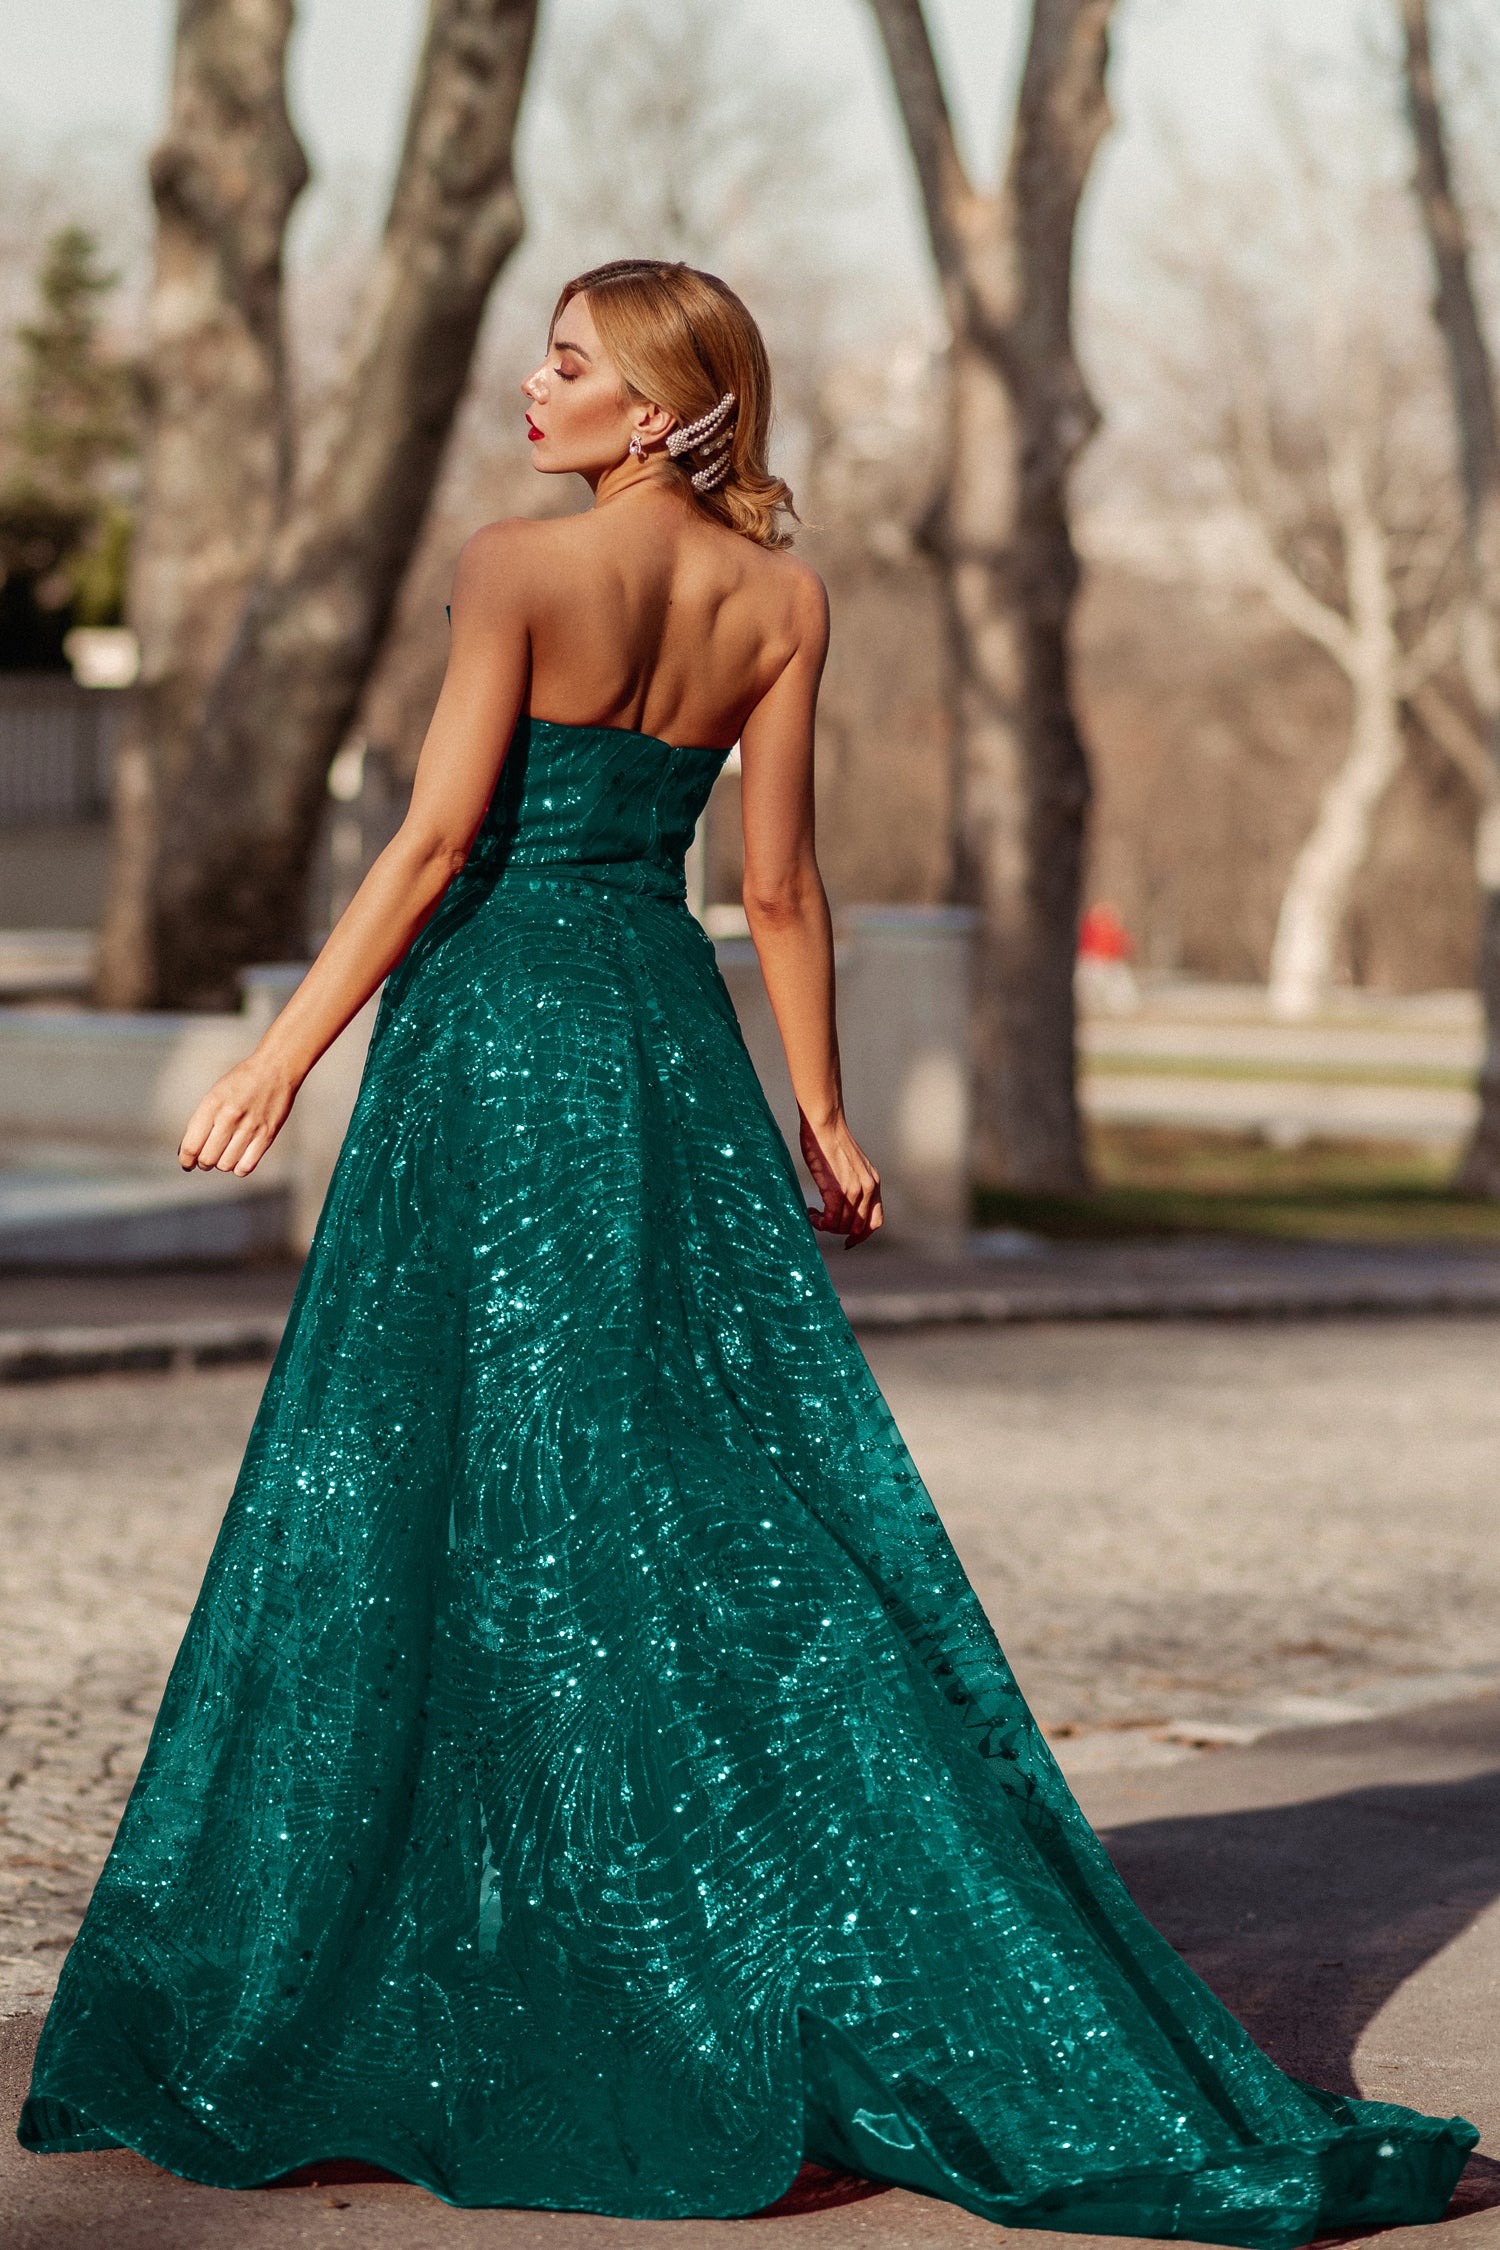 Tina Holly Couture Designer TK310 Emerald Green Glitter Formal Dress w Over Skirt